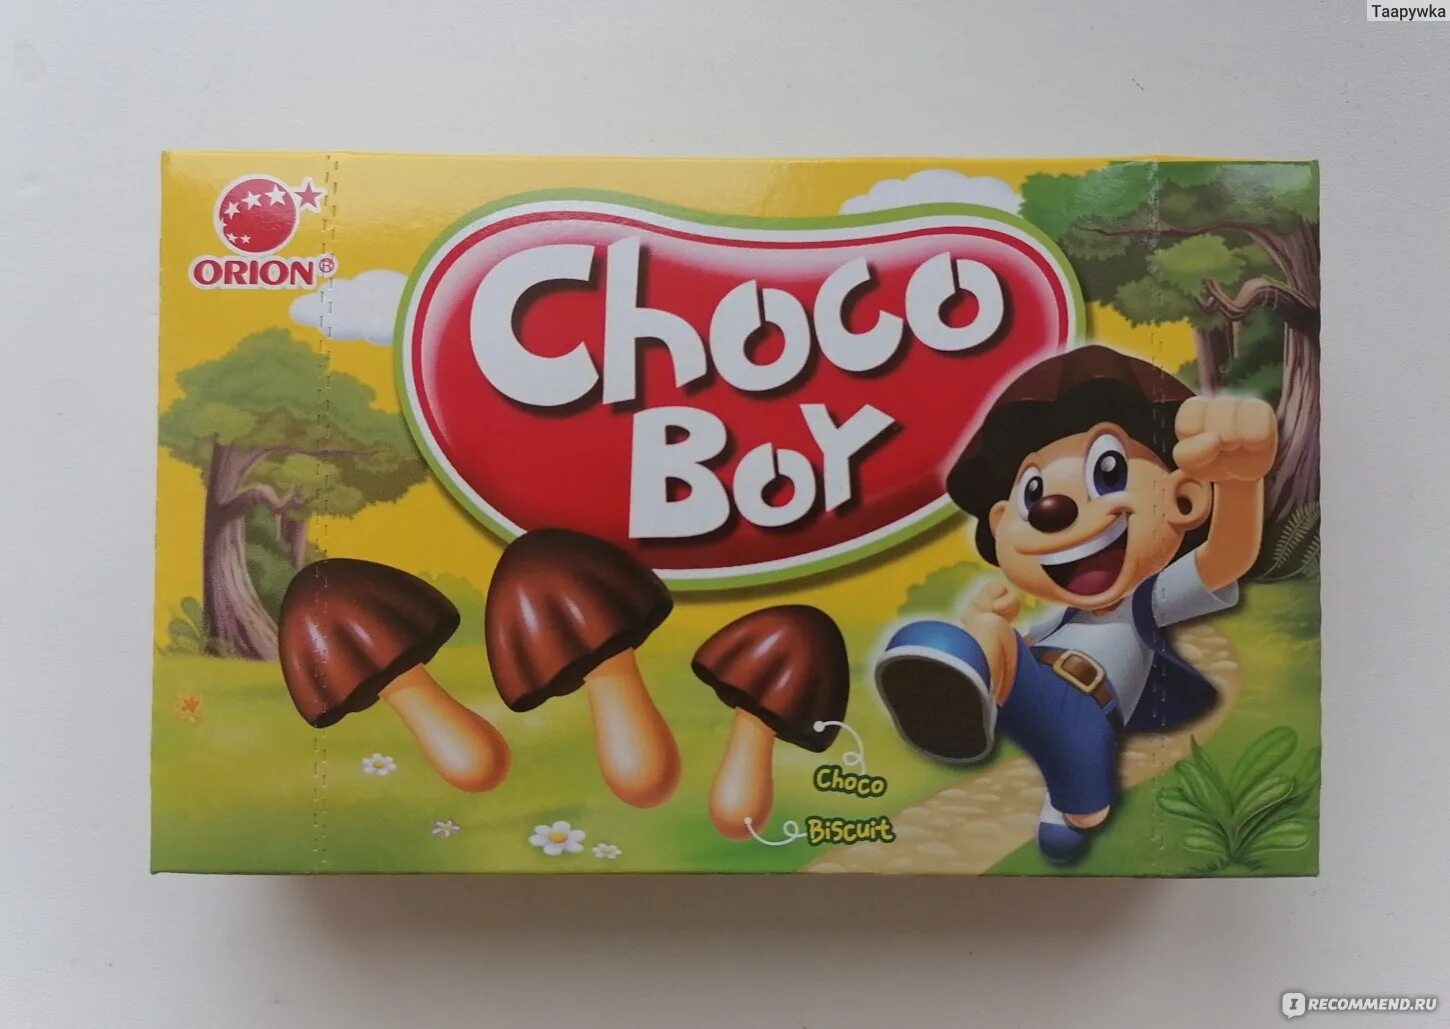 Jelly boy orion. Orion Choco boy печенье 45g. Грибочки Орион Чоко бой. Грибочки шоколадные Choco boy. Choco boy 45 гр.